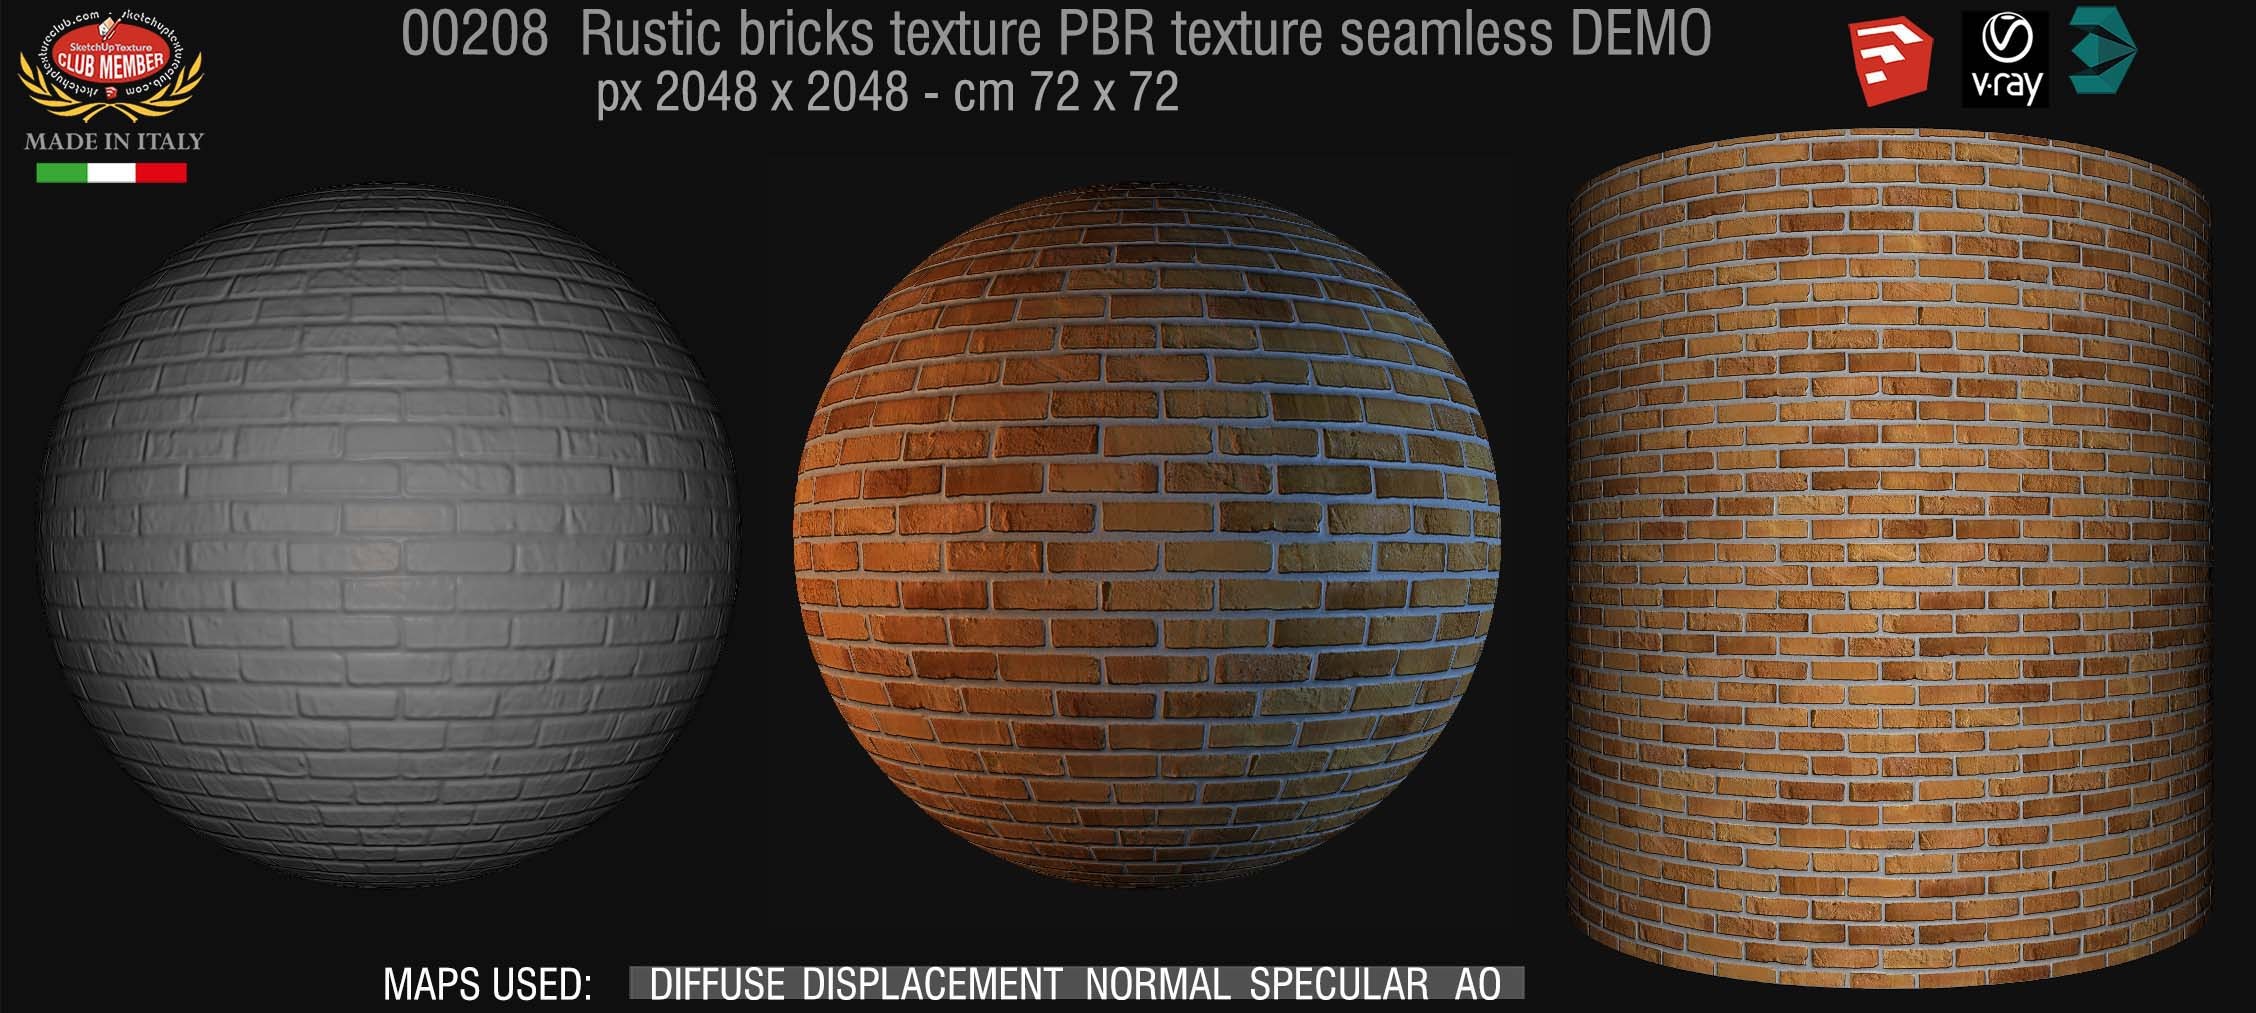 00208 rustic bricks PBR texture seamless DEMO